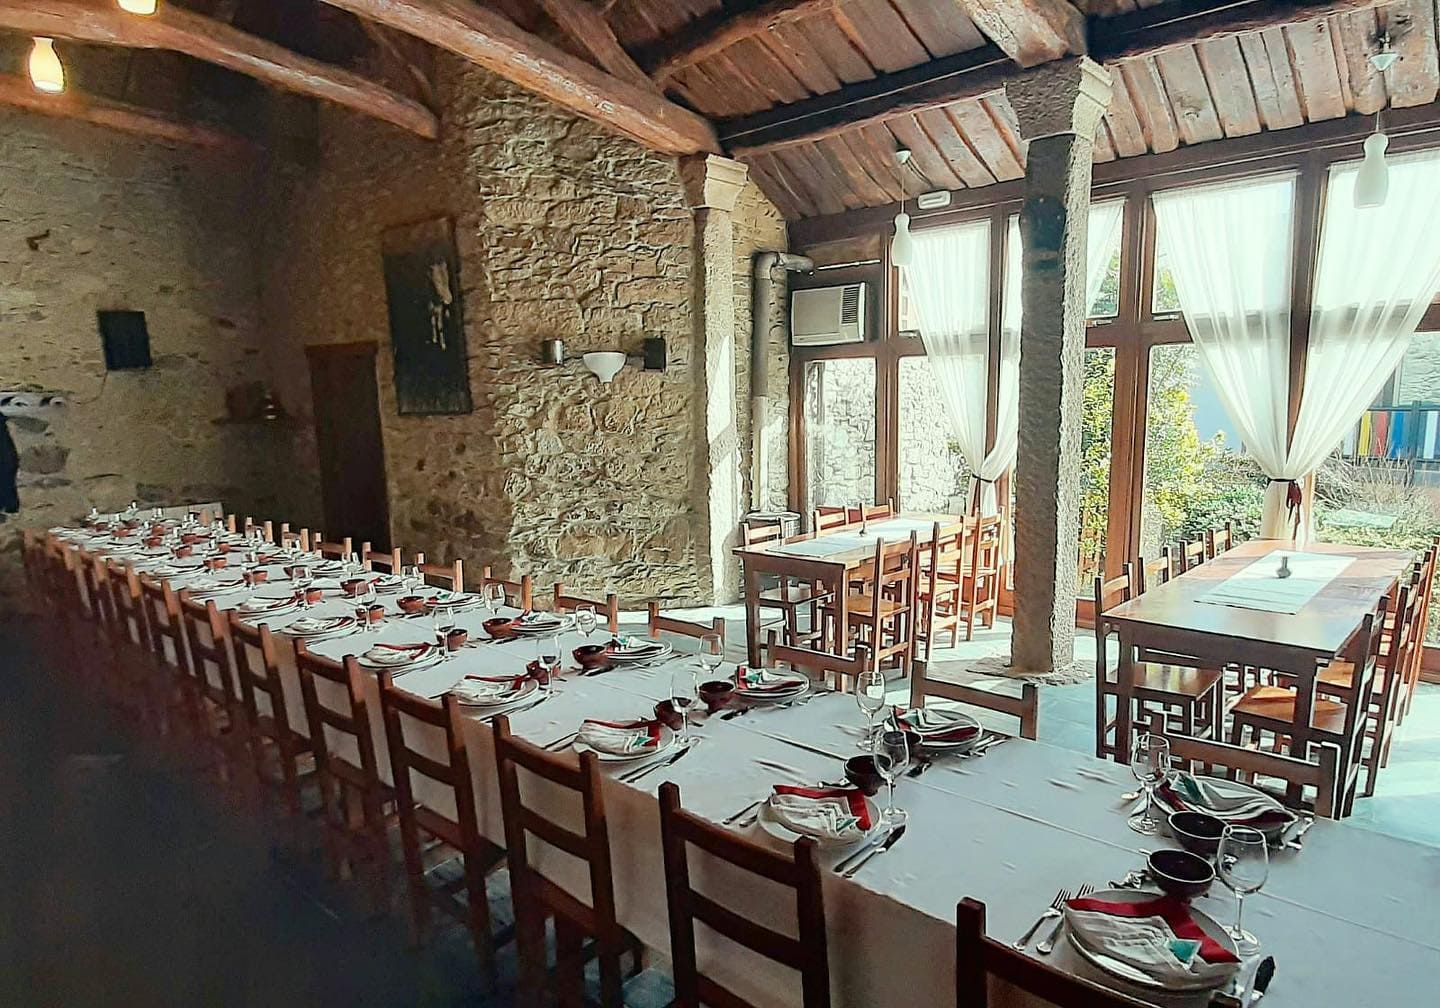 Restaurante en fabrica de quesos, situado en Sobrado (A Coruña) con una cocina casera gallega.     